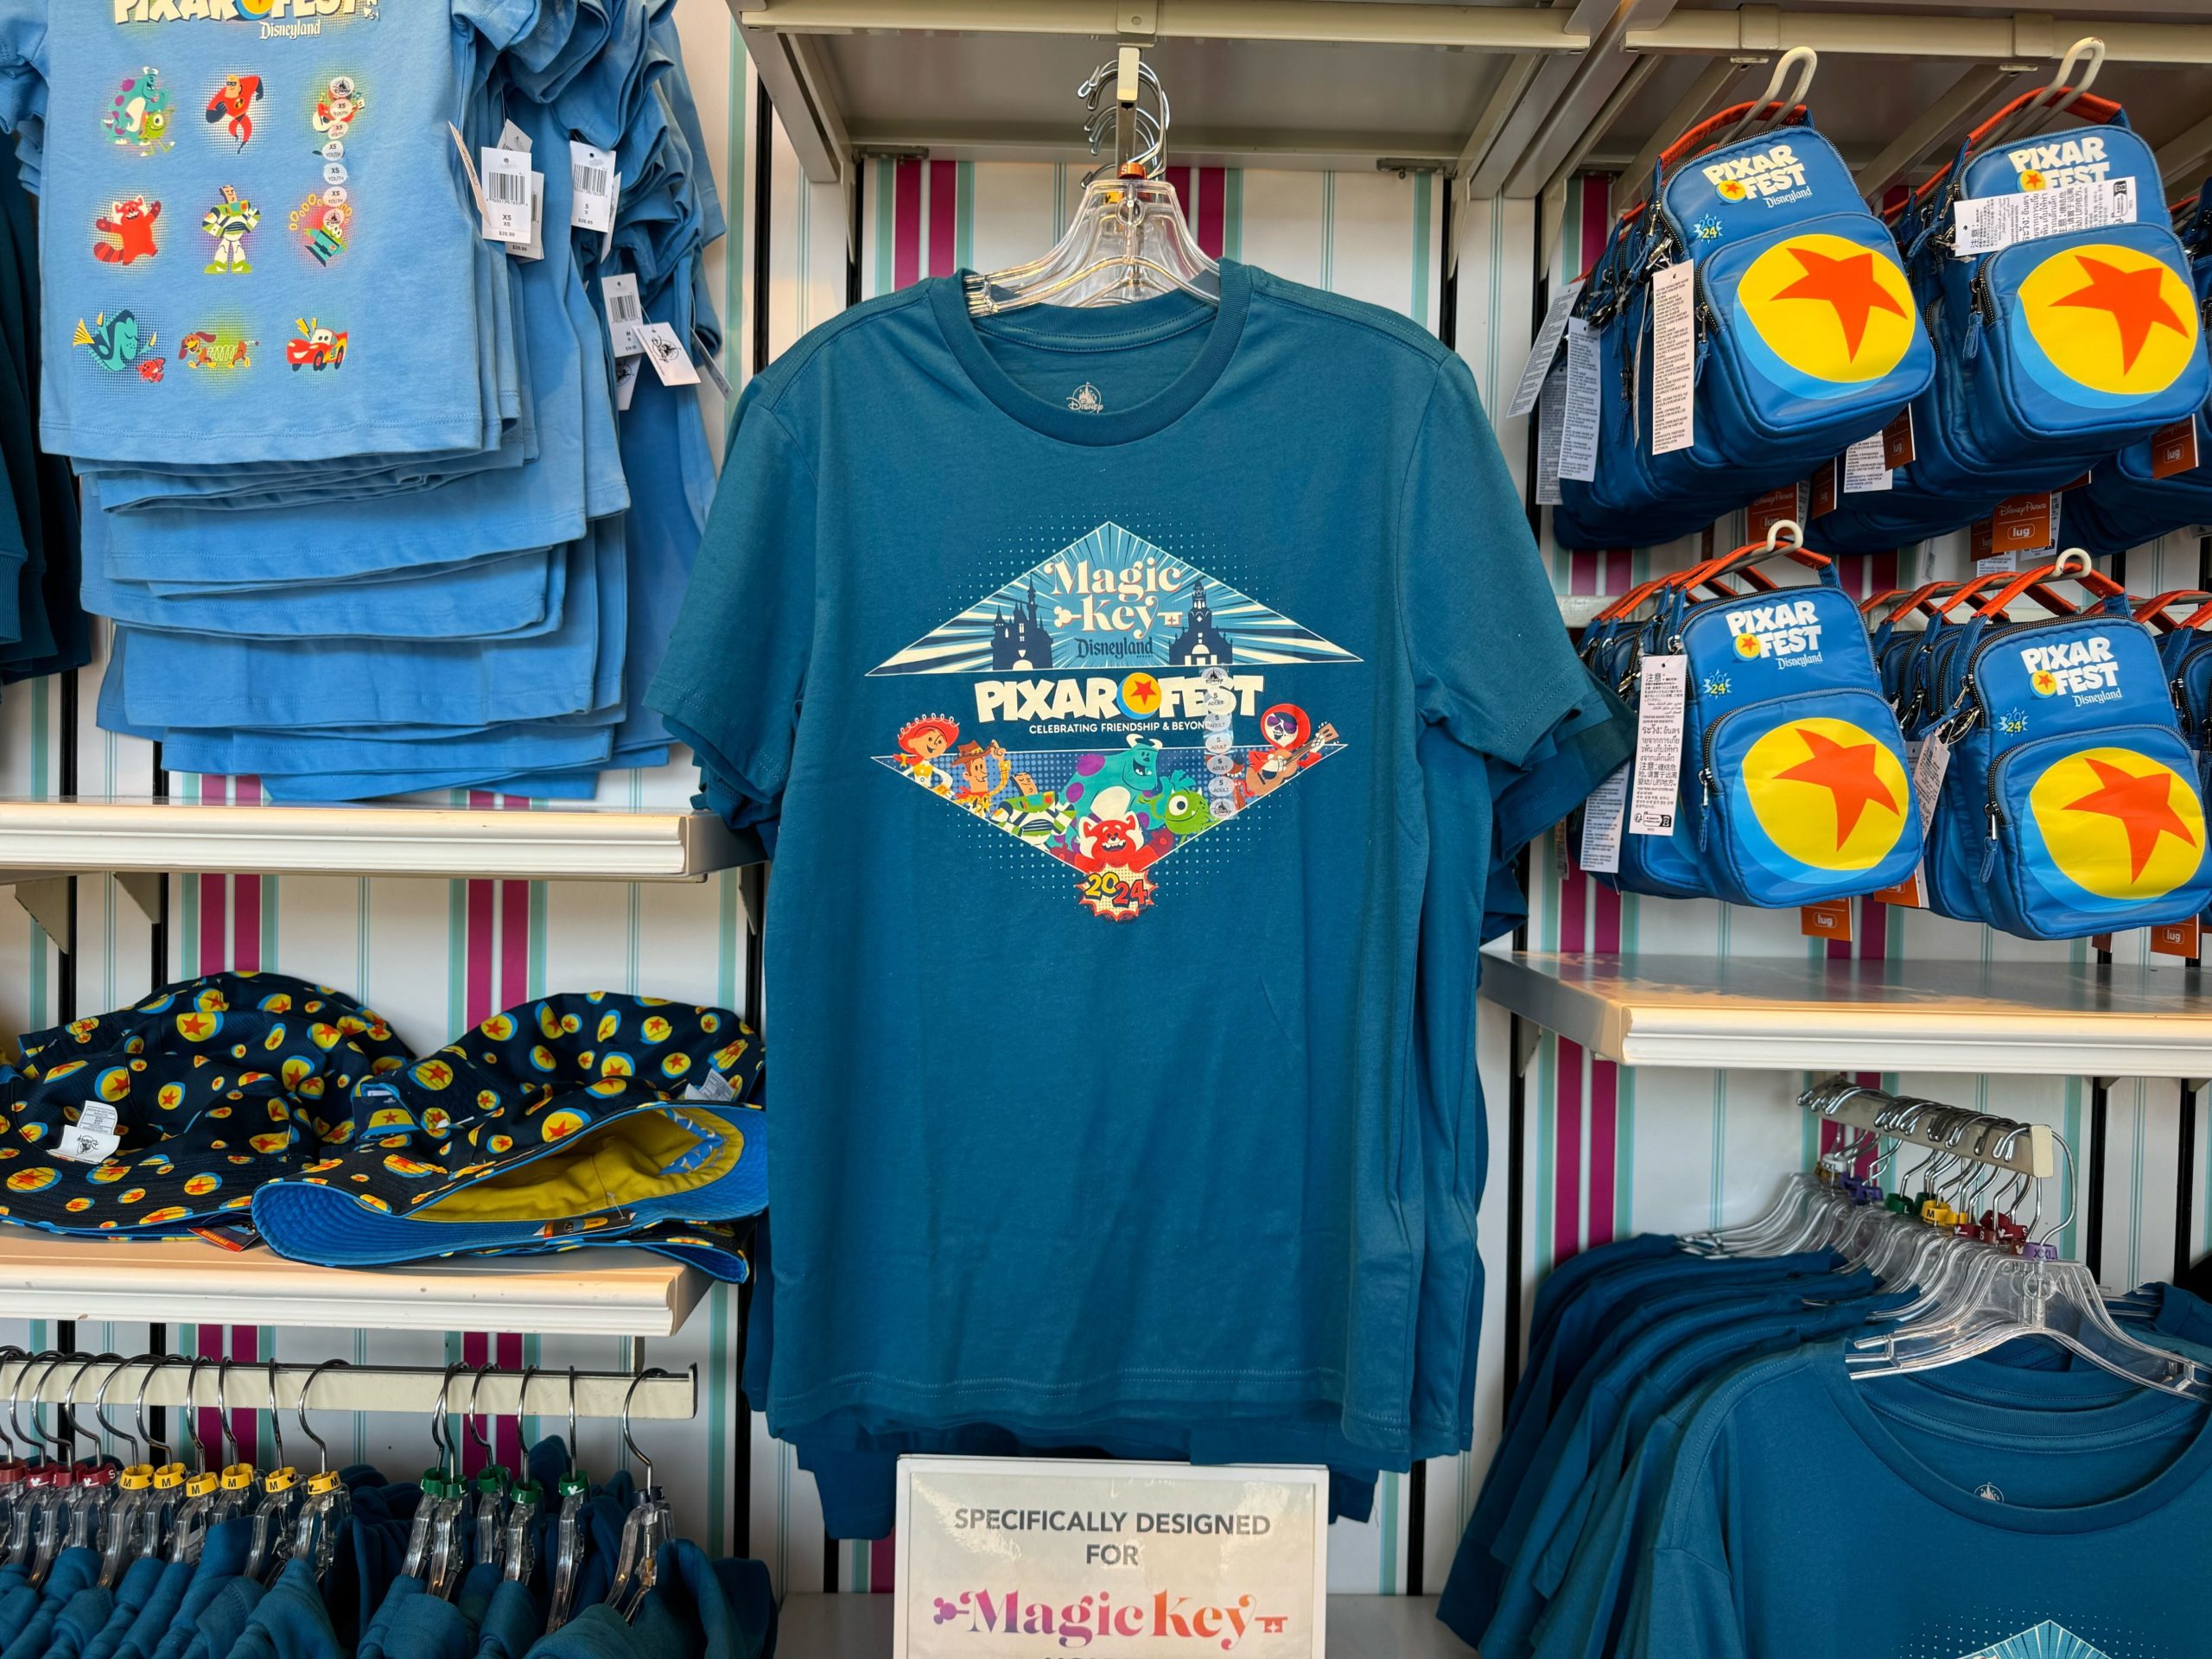 Pixar Fest T-Shirt